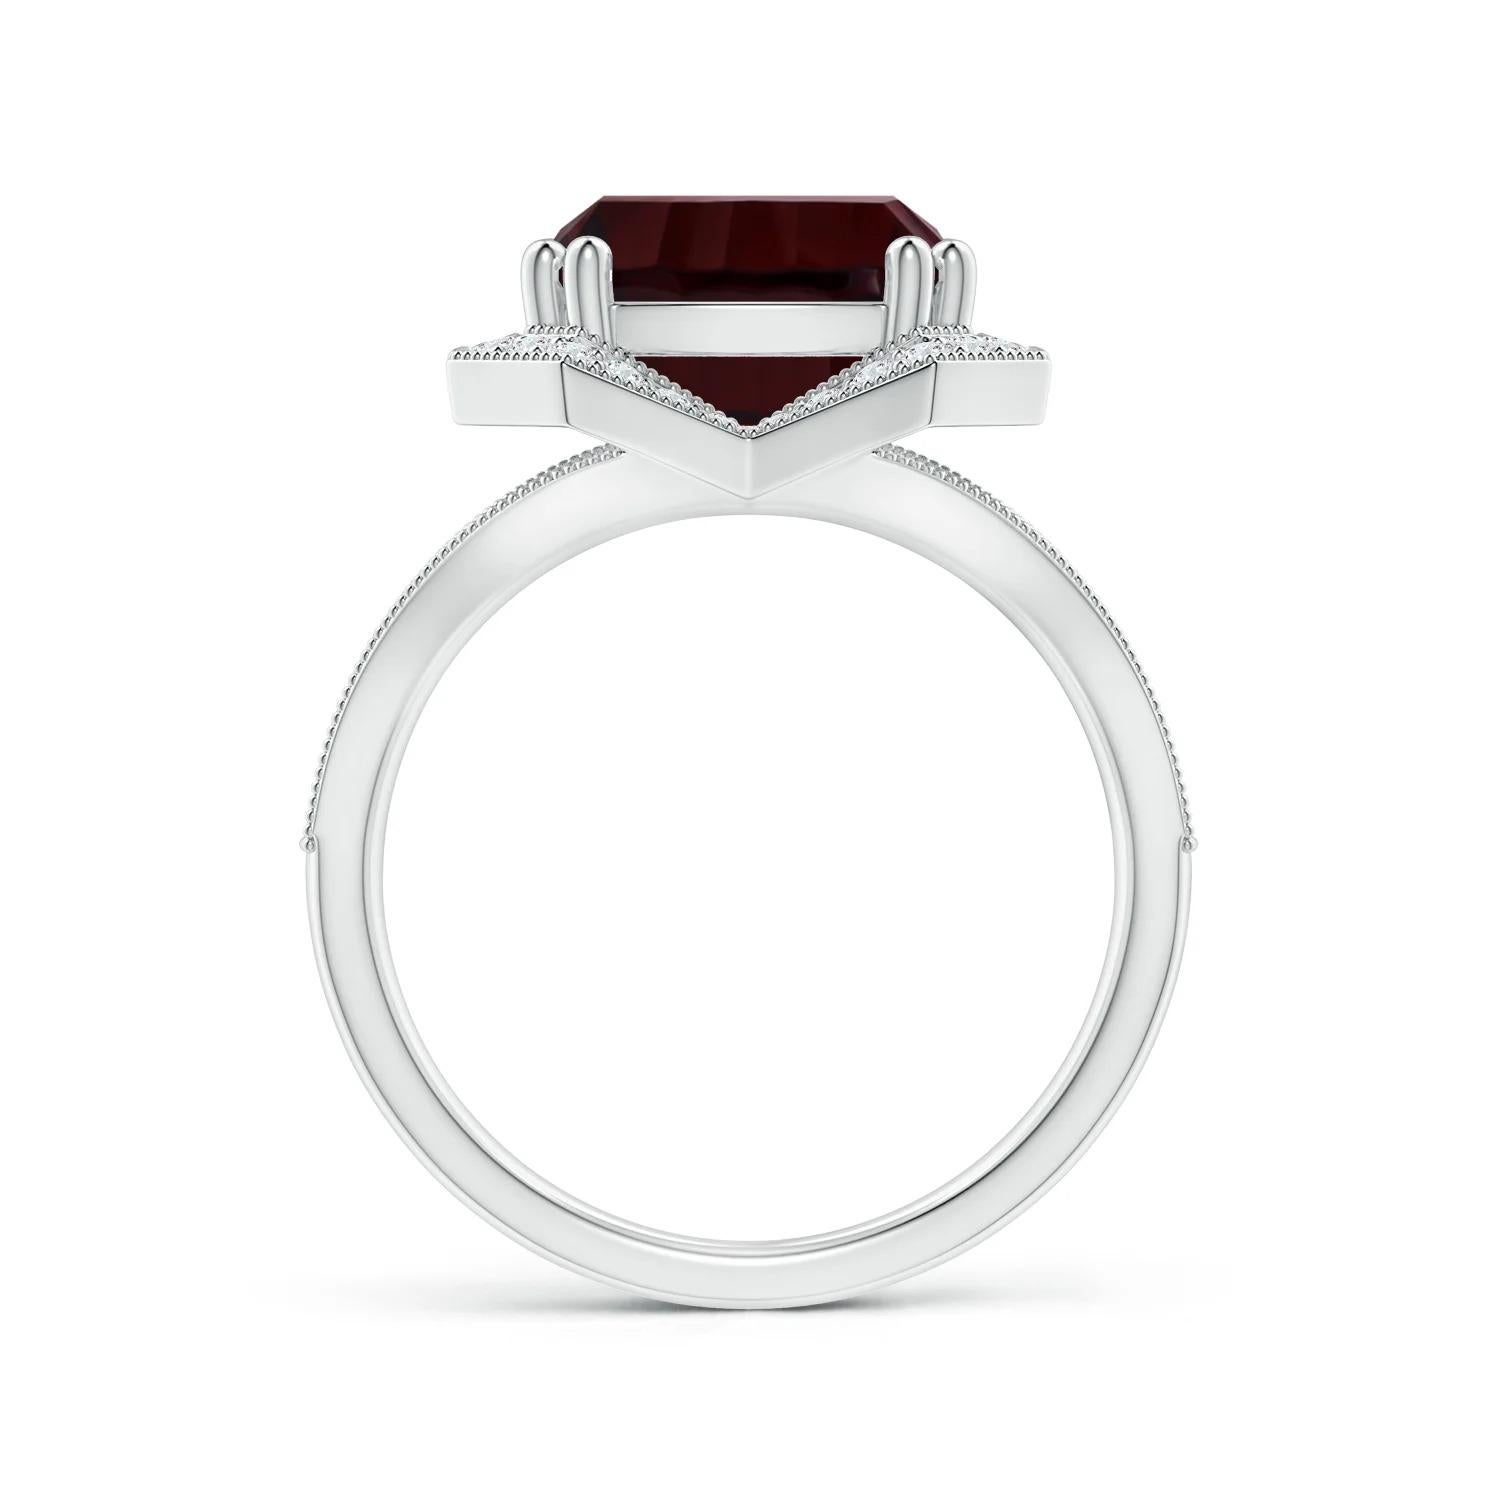 For Sale:  Angara Gia Certified Natural Rectangular Garnet Halo Cocktail Ring in White Gold 2